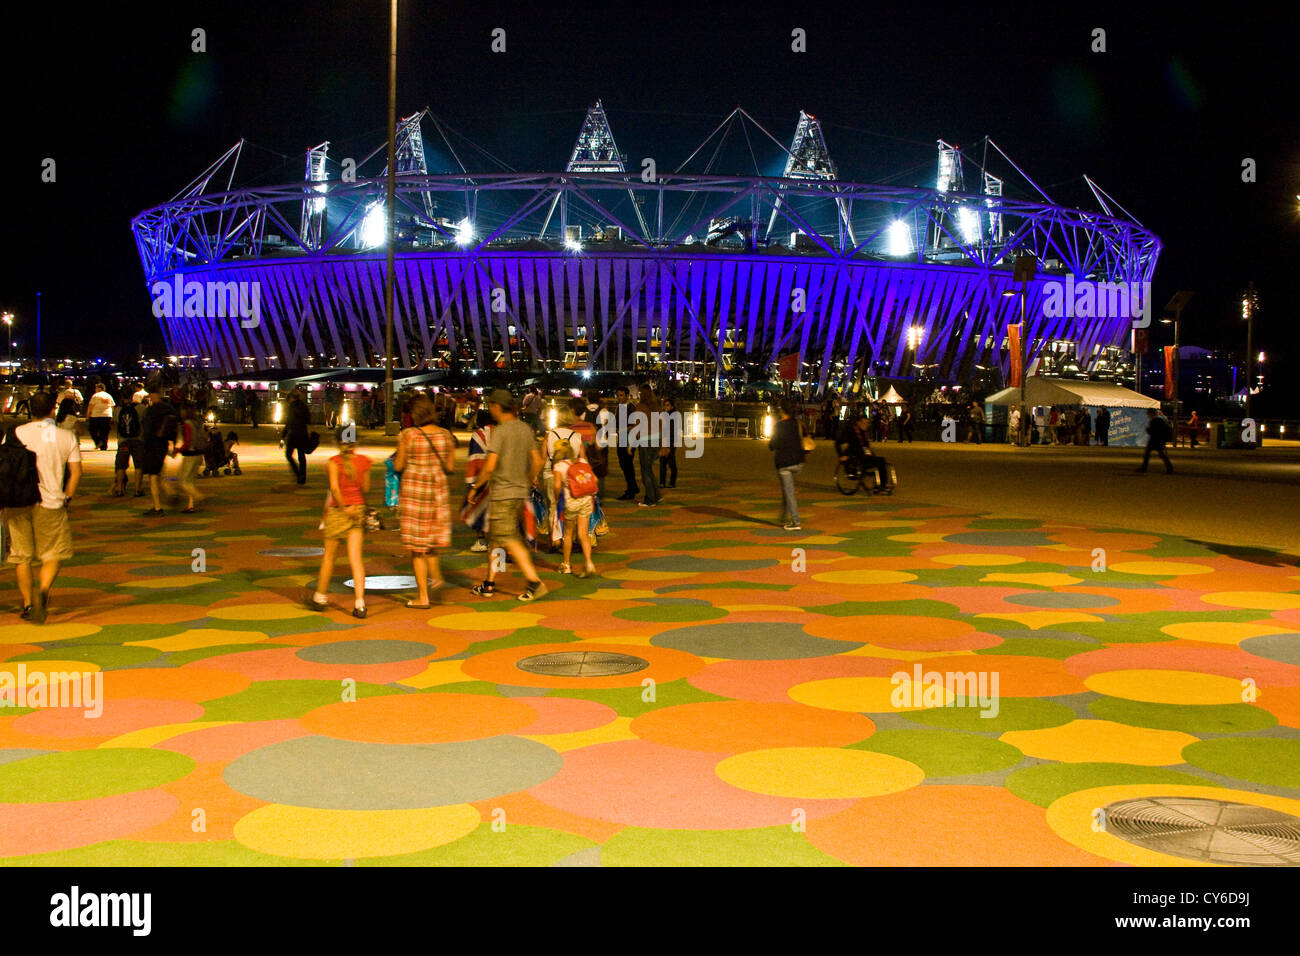 London 2012 Olympic stadium and park illuminated at night Stratford England Europe Stock Photo